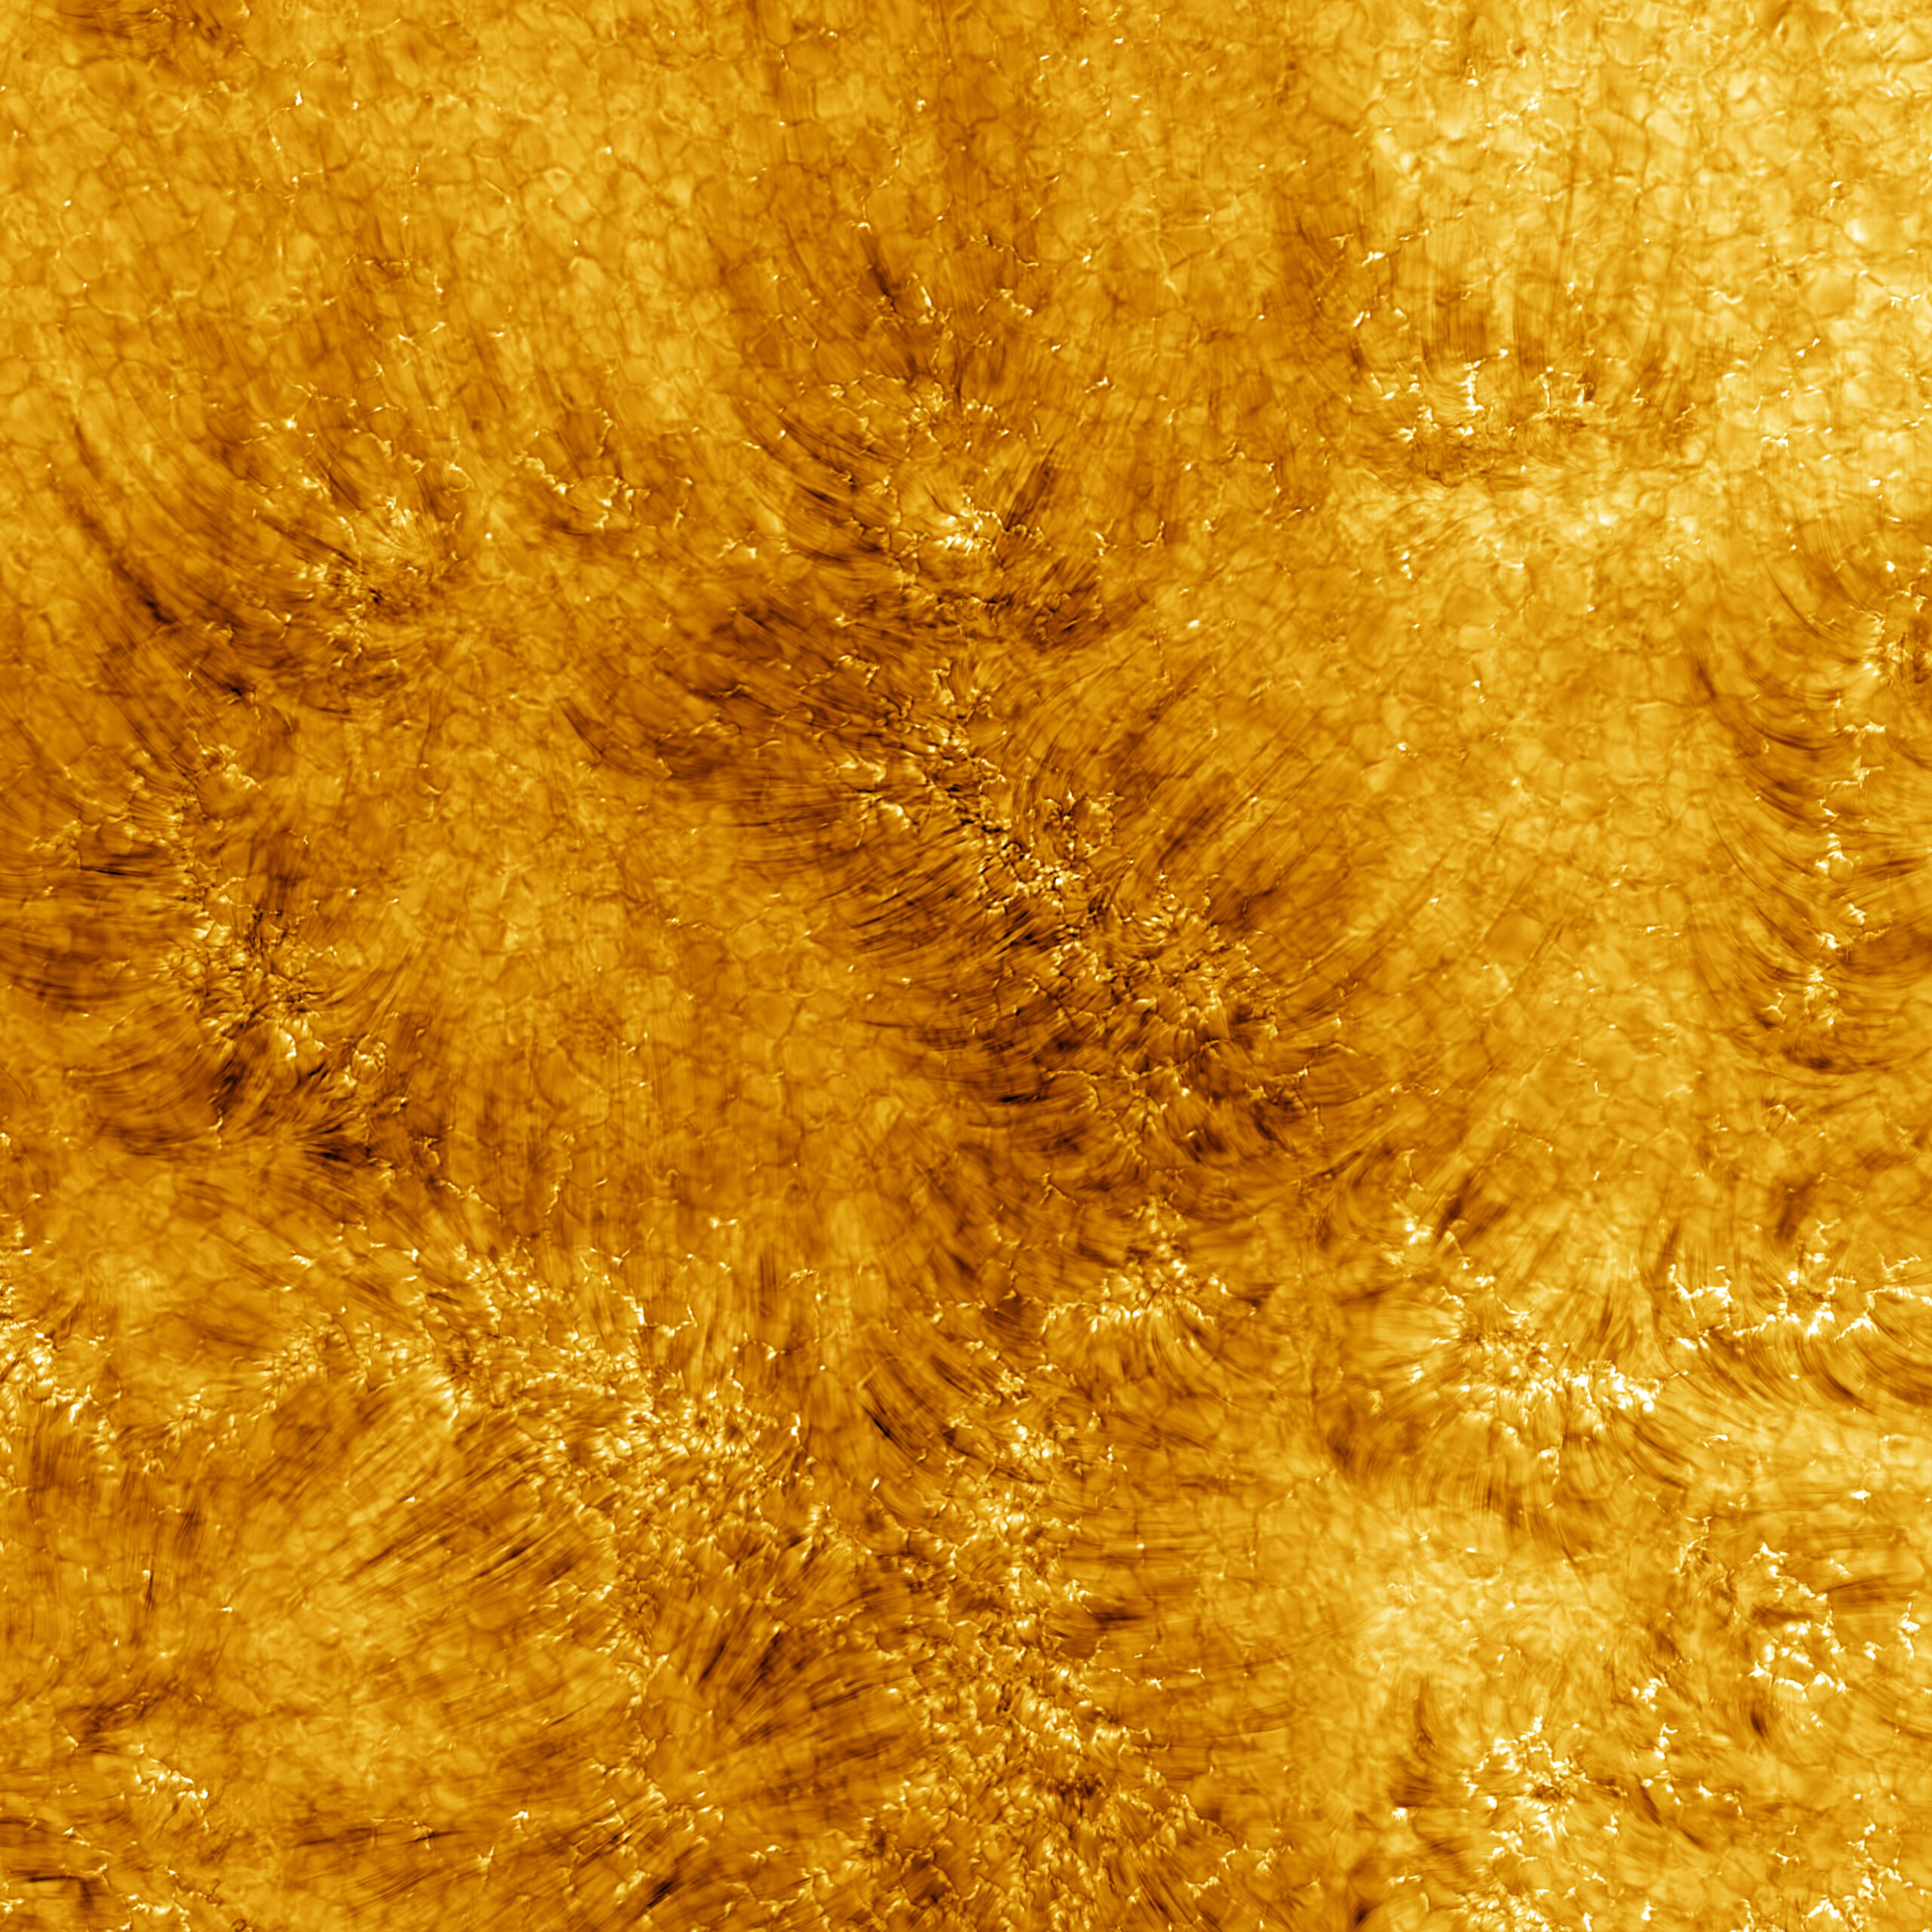 Inouye太阳望远镜图像太阳色球